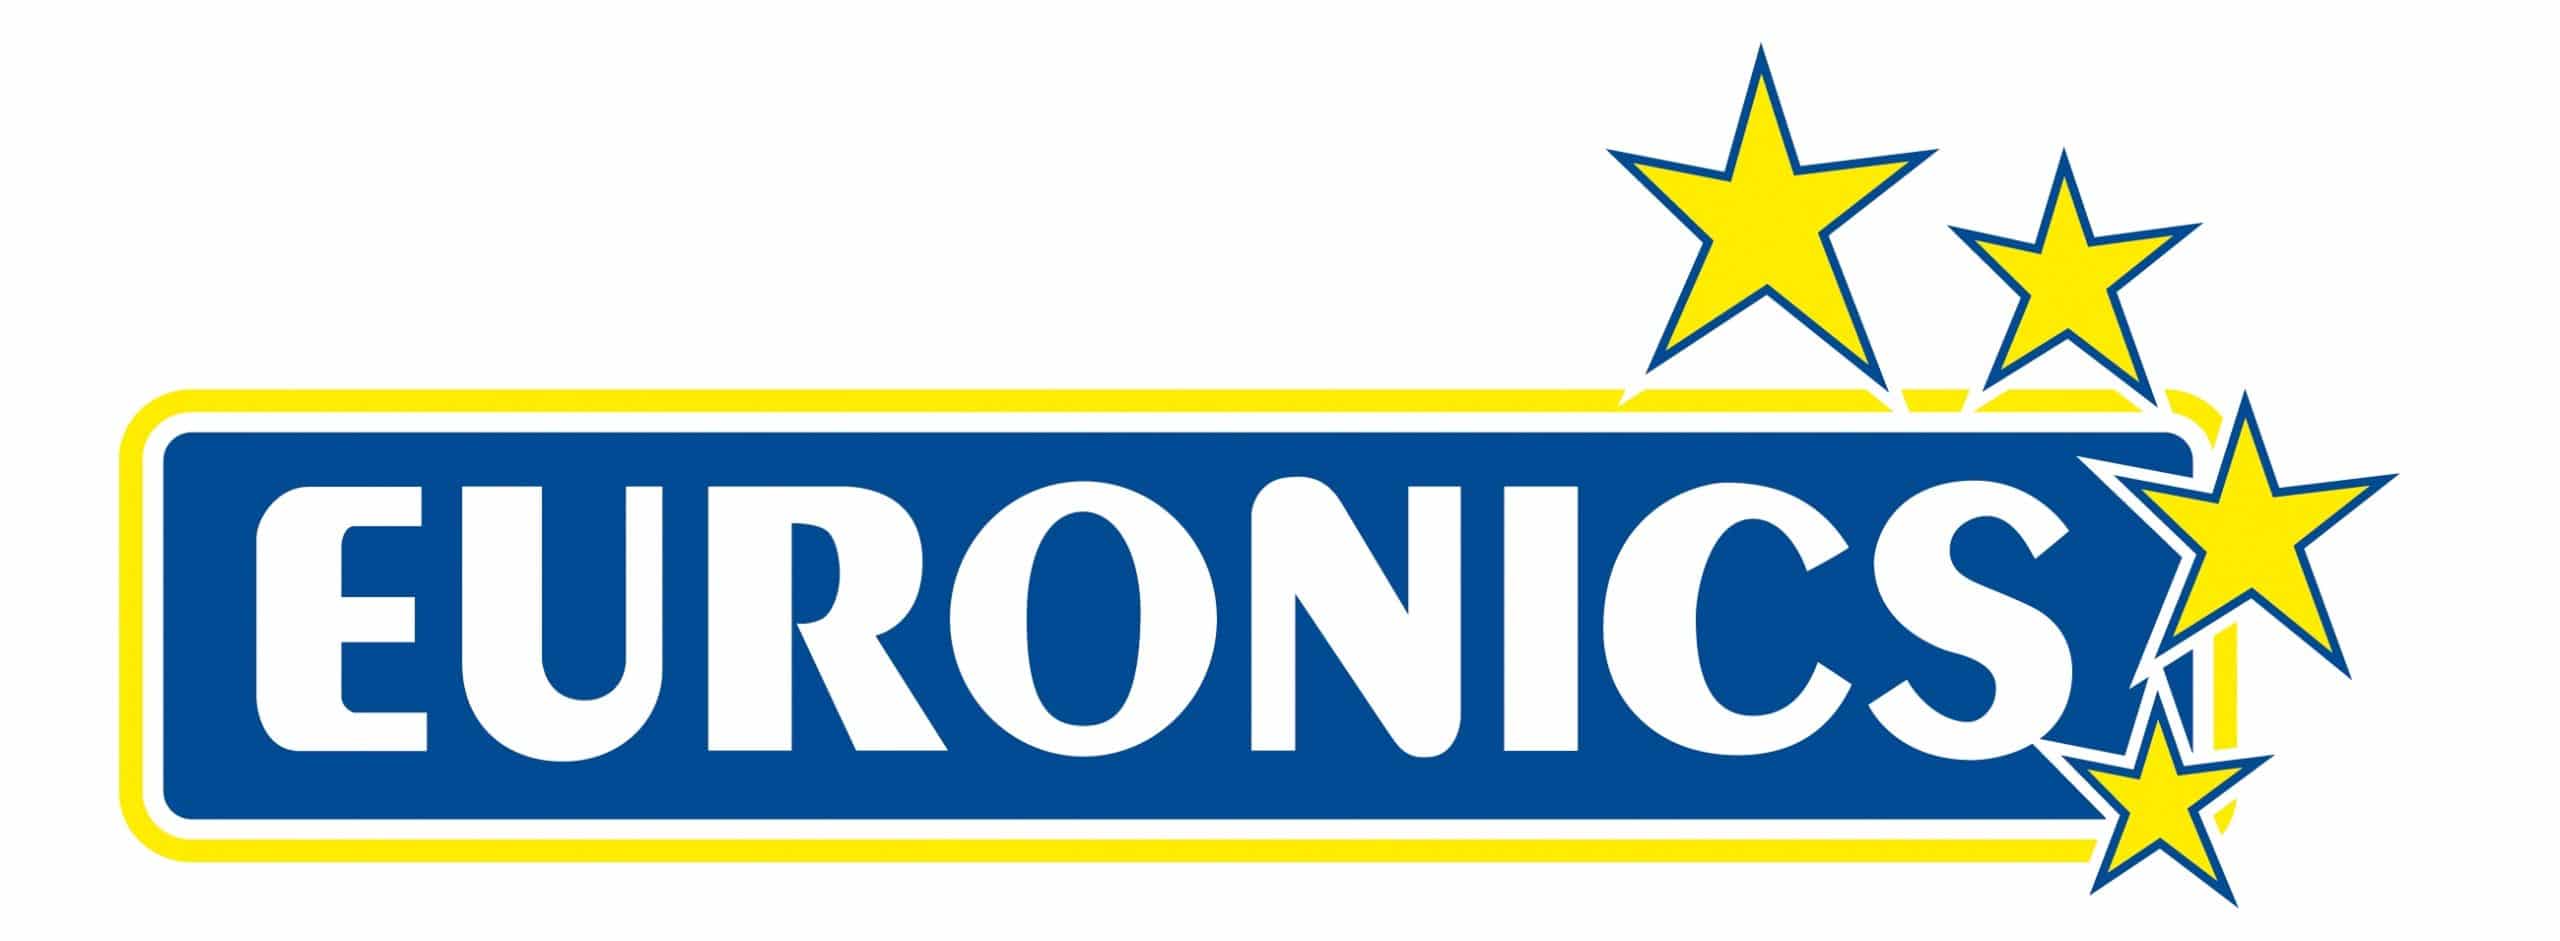 EURONICS-logo